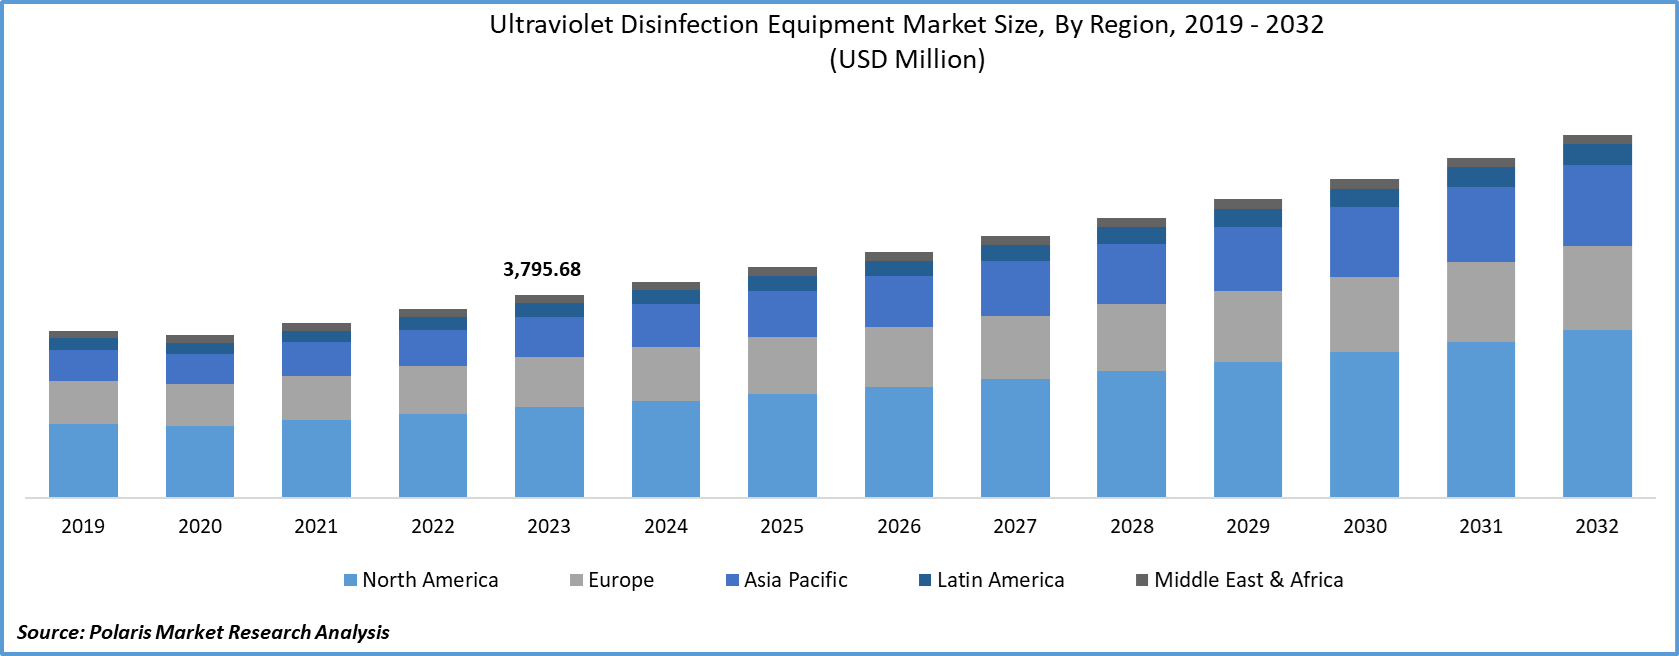 Ultraviolet Disinfection Equipment Market Size